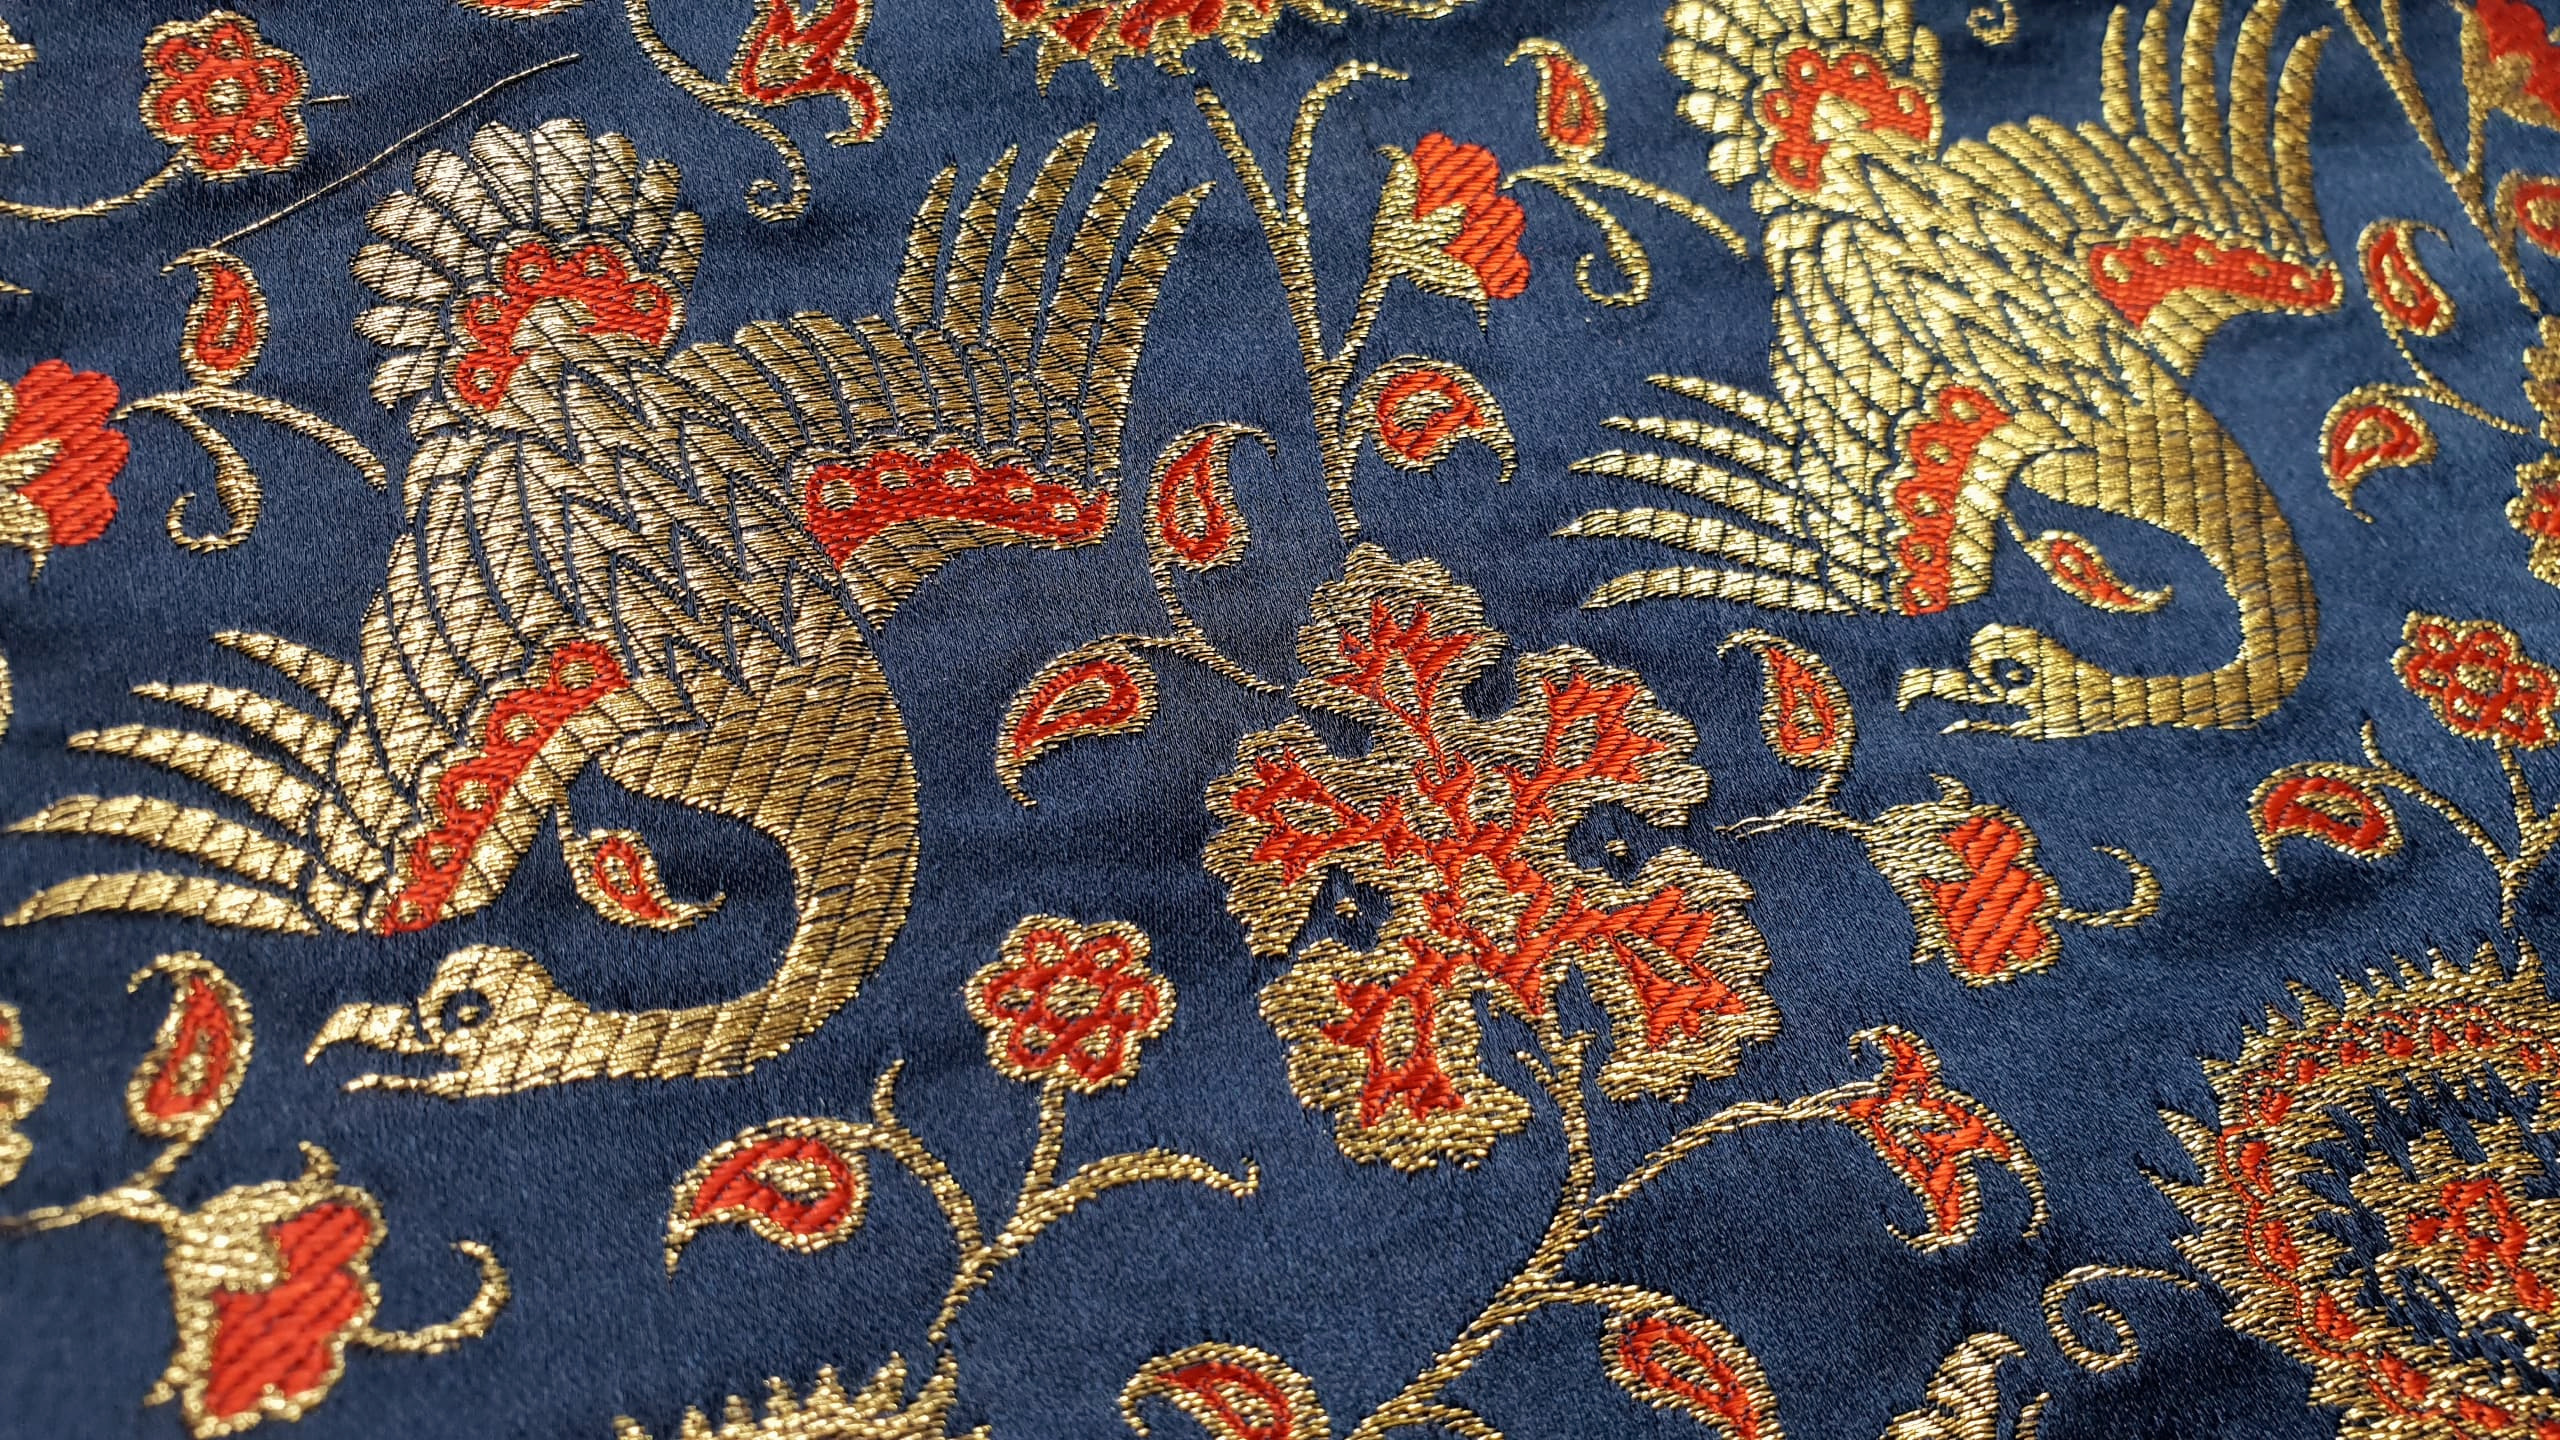 Silk brocade- gold birds on dark blue 14th cent